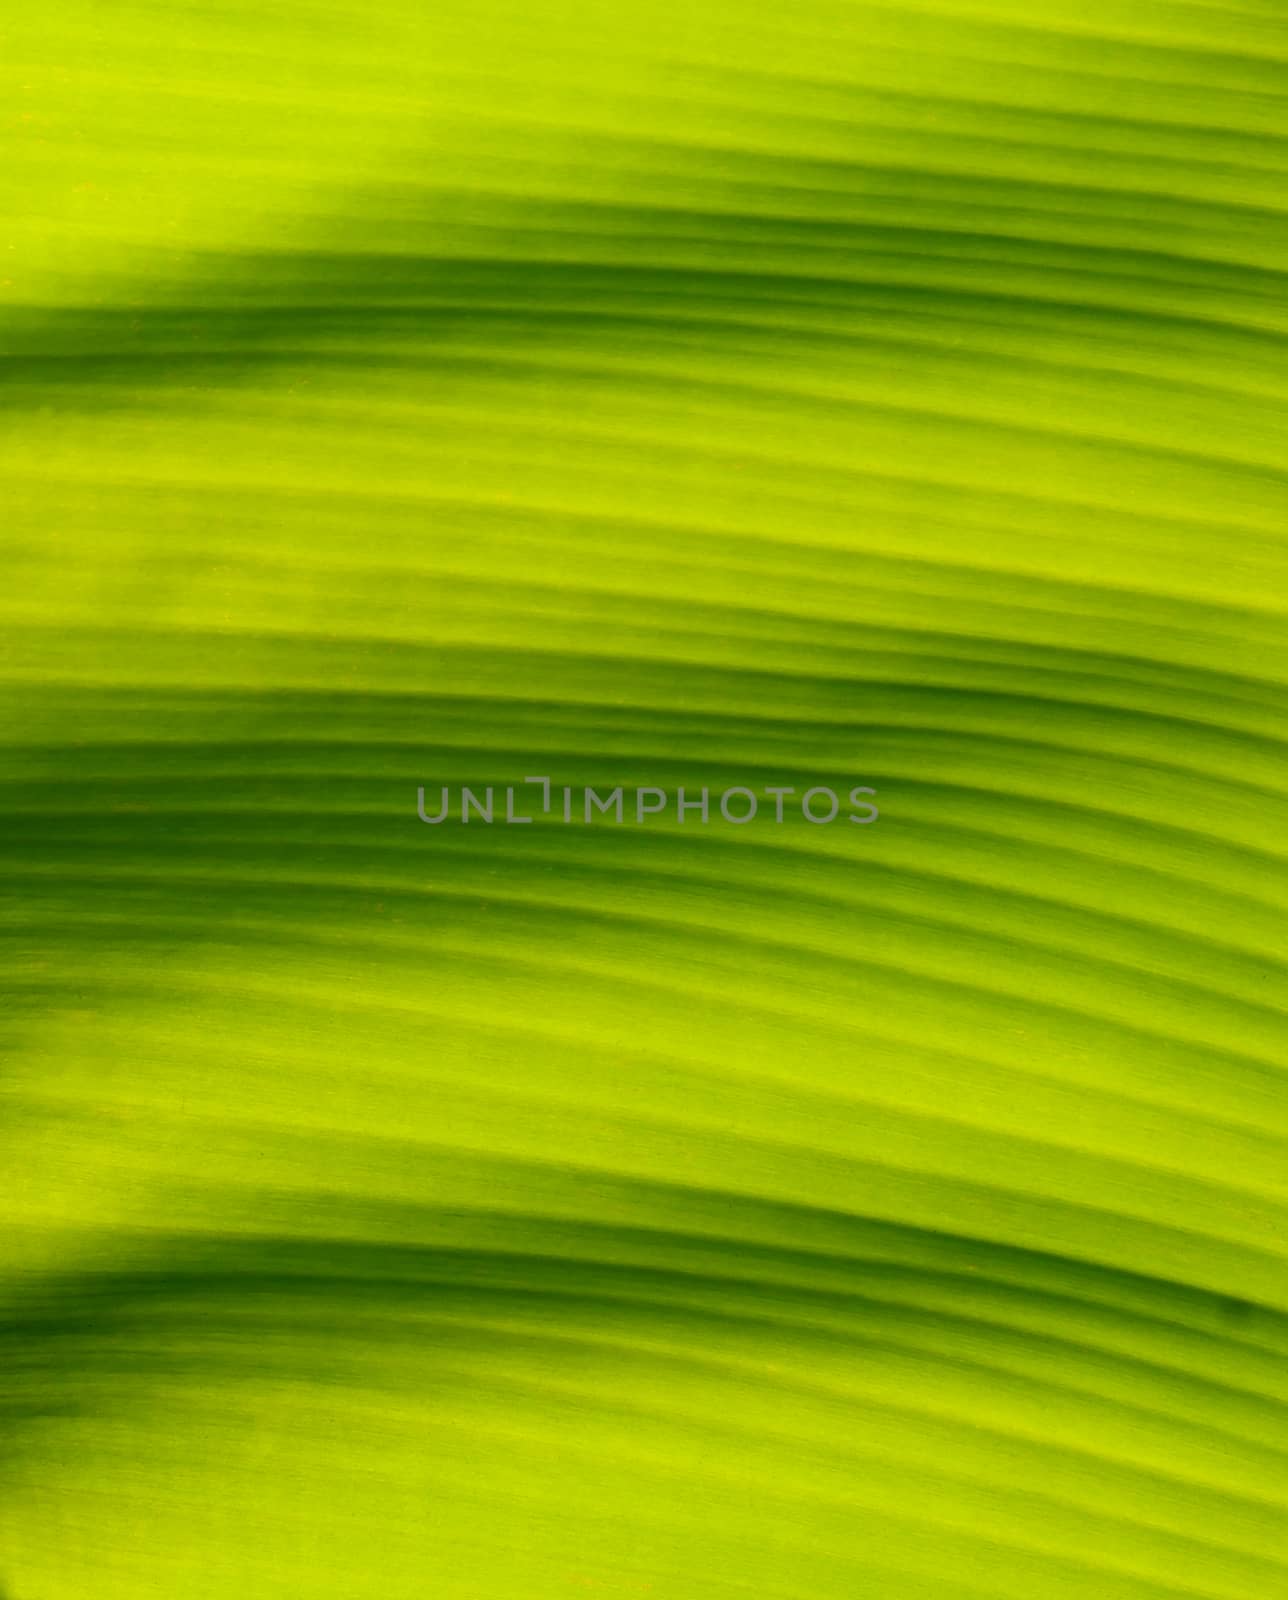 closeup of banana leaf texture